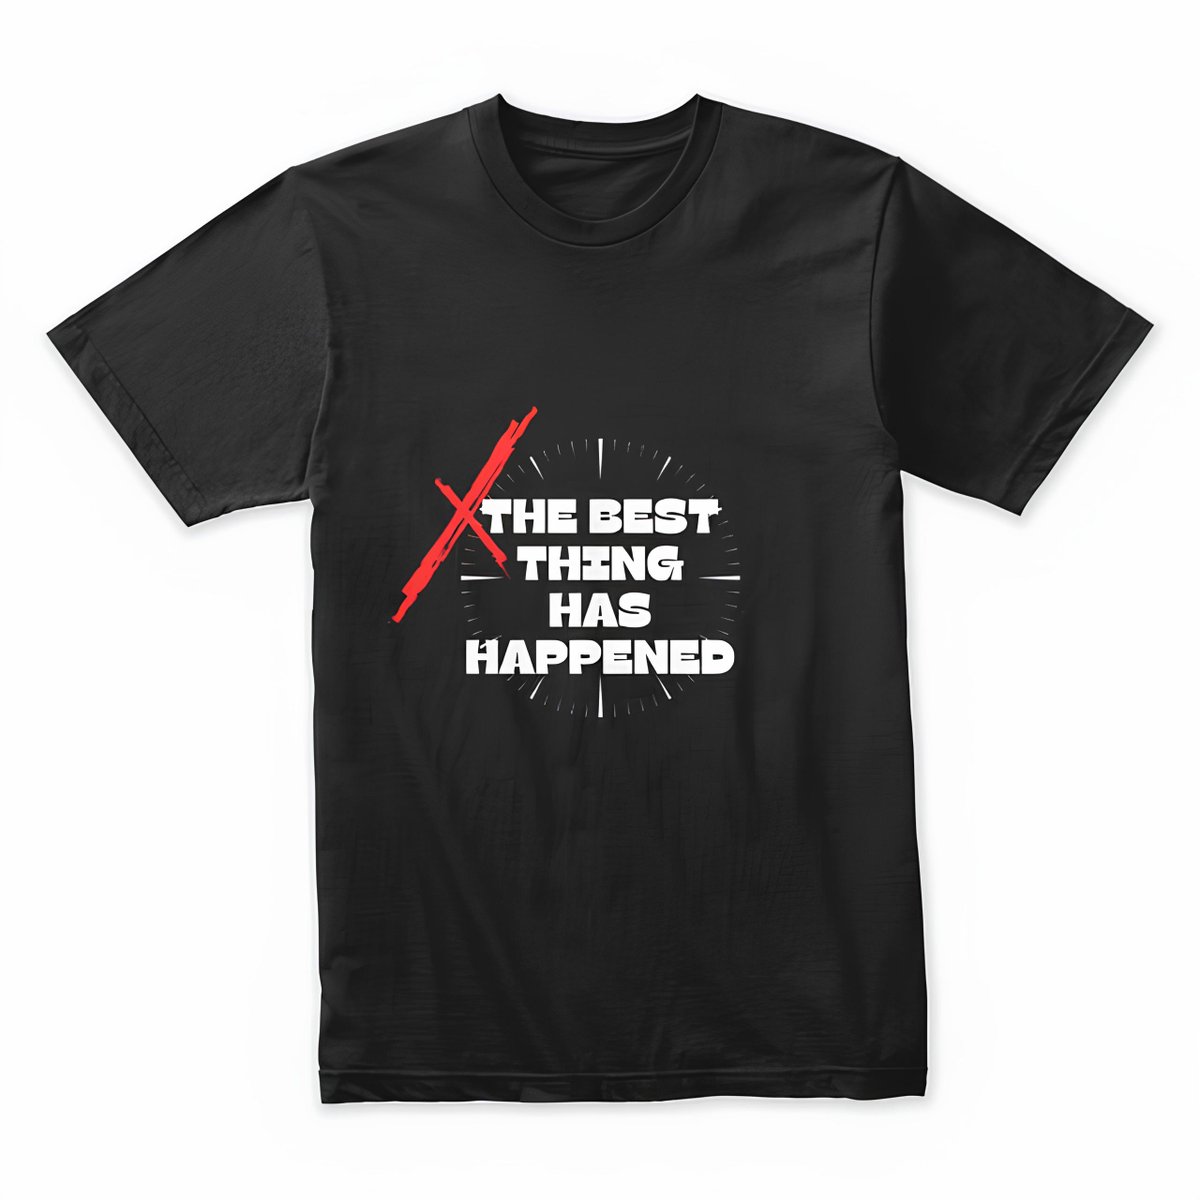 life quotes T-Shirt
buy now -my-store-d3a070.creator-spring.com/listing/life-q…
#tshirtstyle #tshirtfashion #teespring  #findyourthing #tshirt #clothing